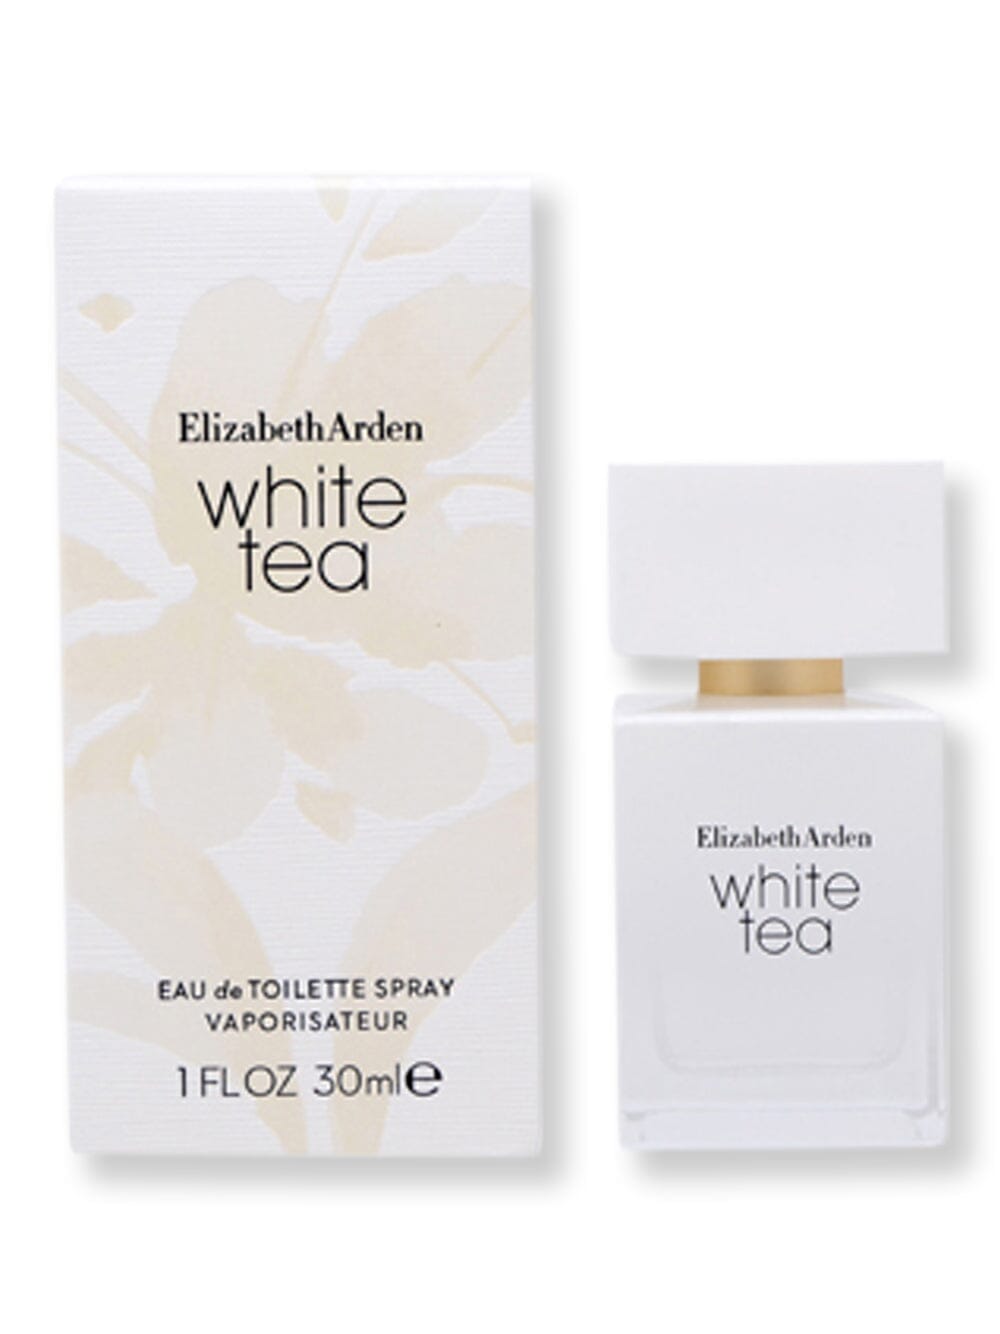 Elizabeth Arden Elizabeth Arden White Tea EDT Spray 1 oz30 ml Perfume 